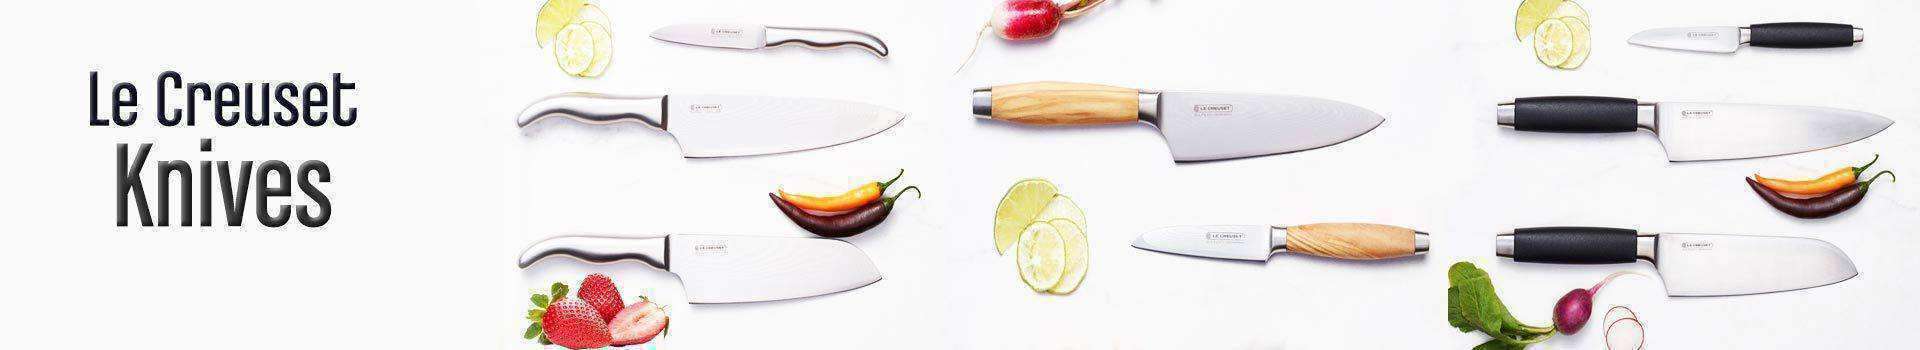 Le Creuset Knives | Kitchen Smart